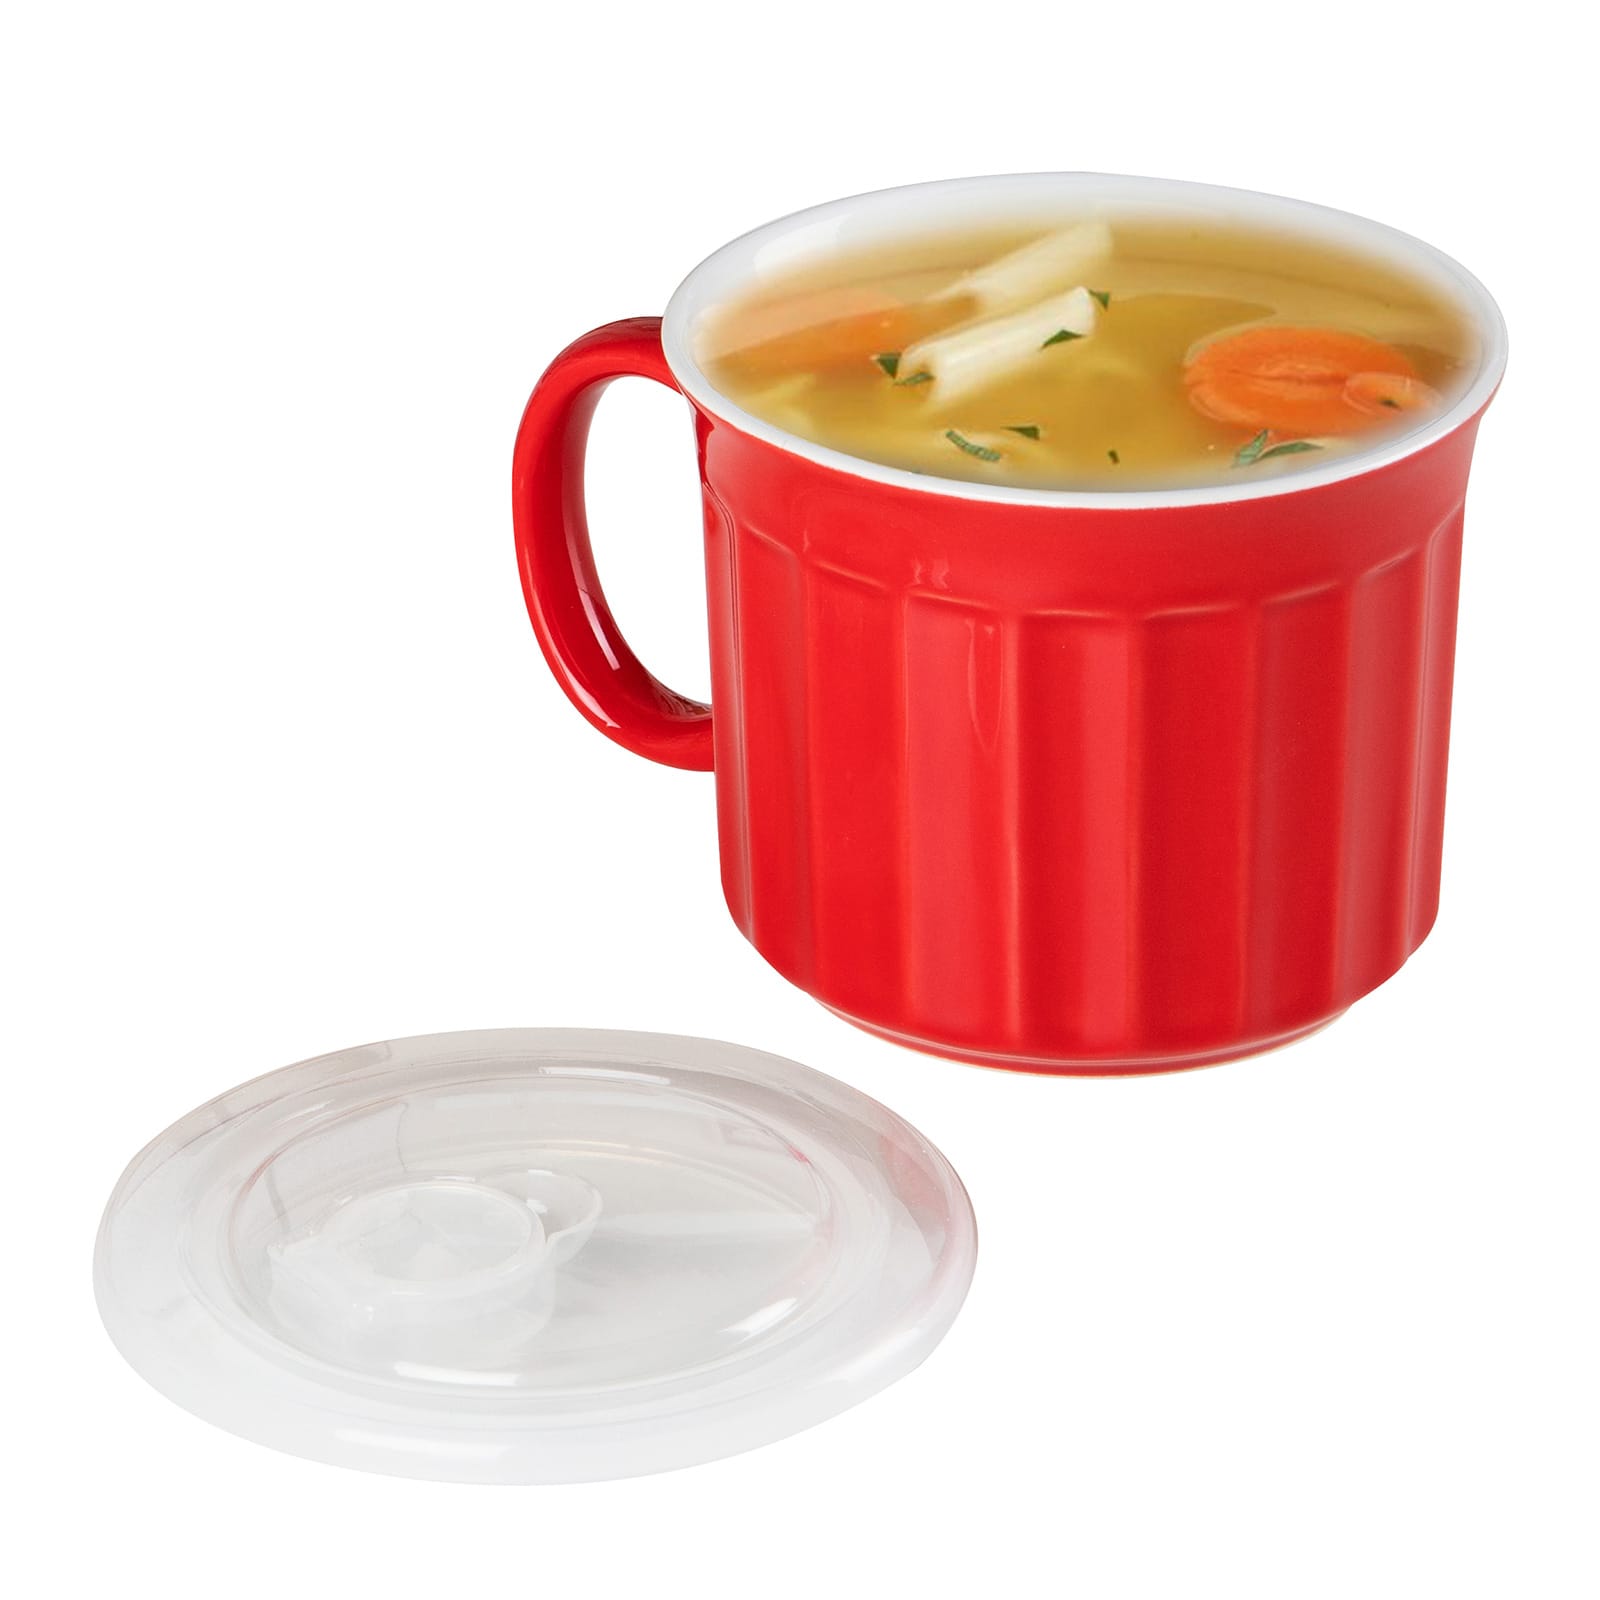 Mind Reader Vented Soup Mug, Stoneware Ceramic Microwave Cup with Handle,  Lid, Dishwasher Safe, Holds 22 Oz., High-Gloss Exterior, Blue 